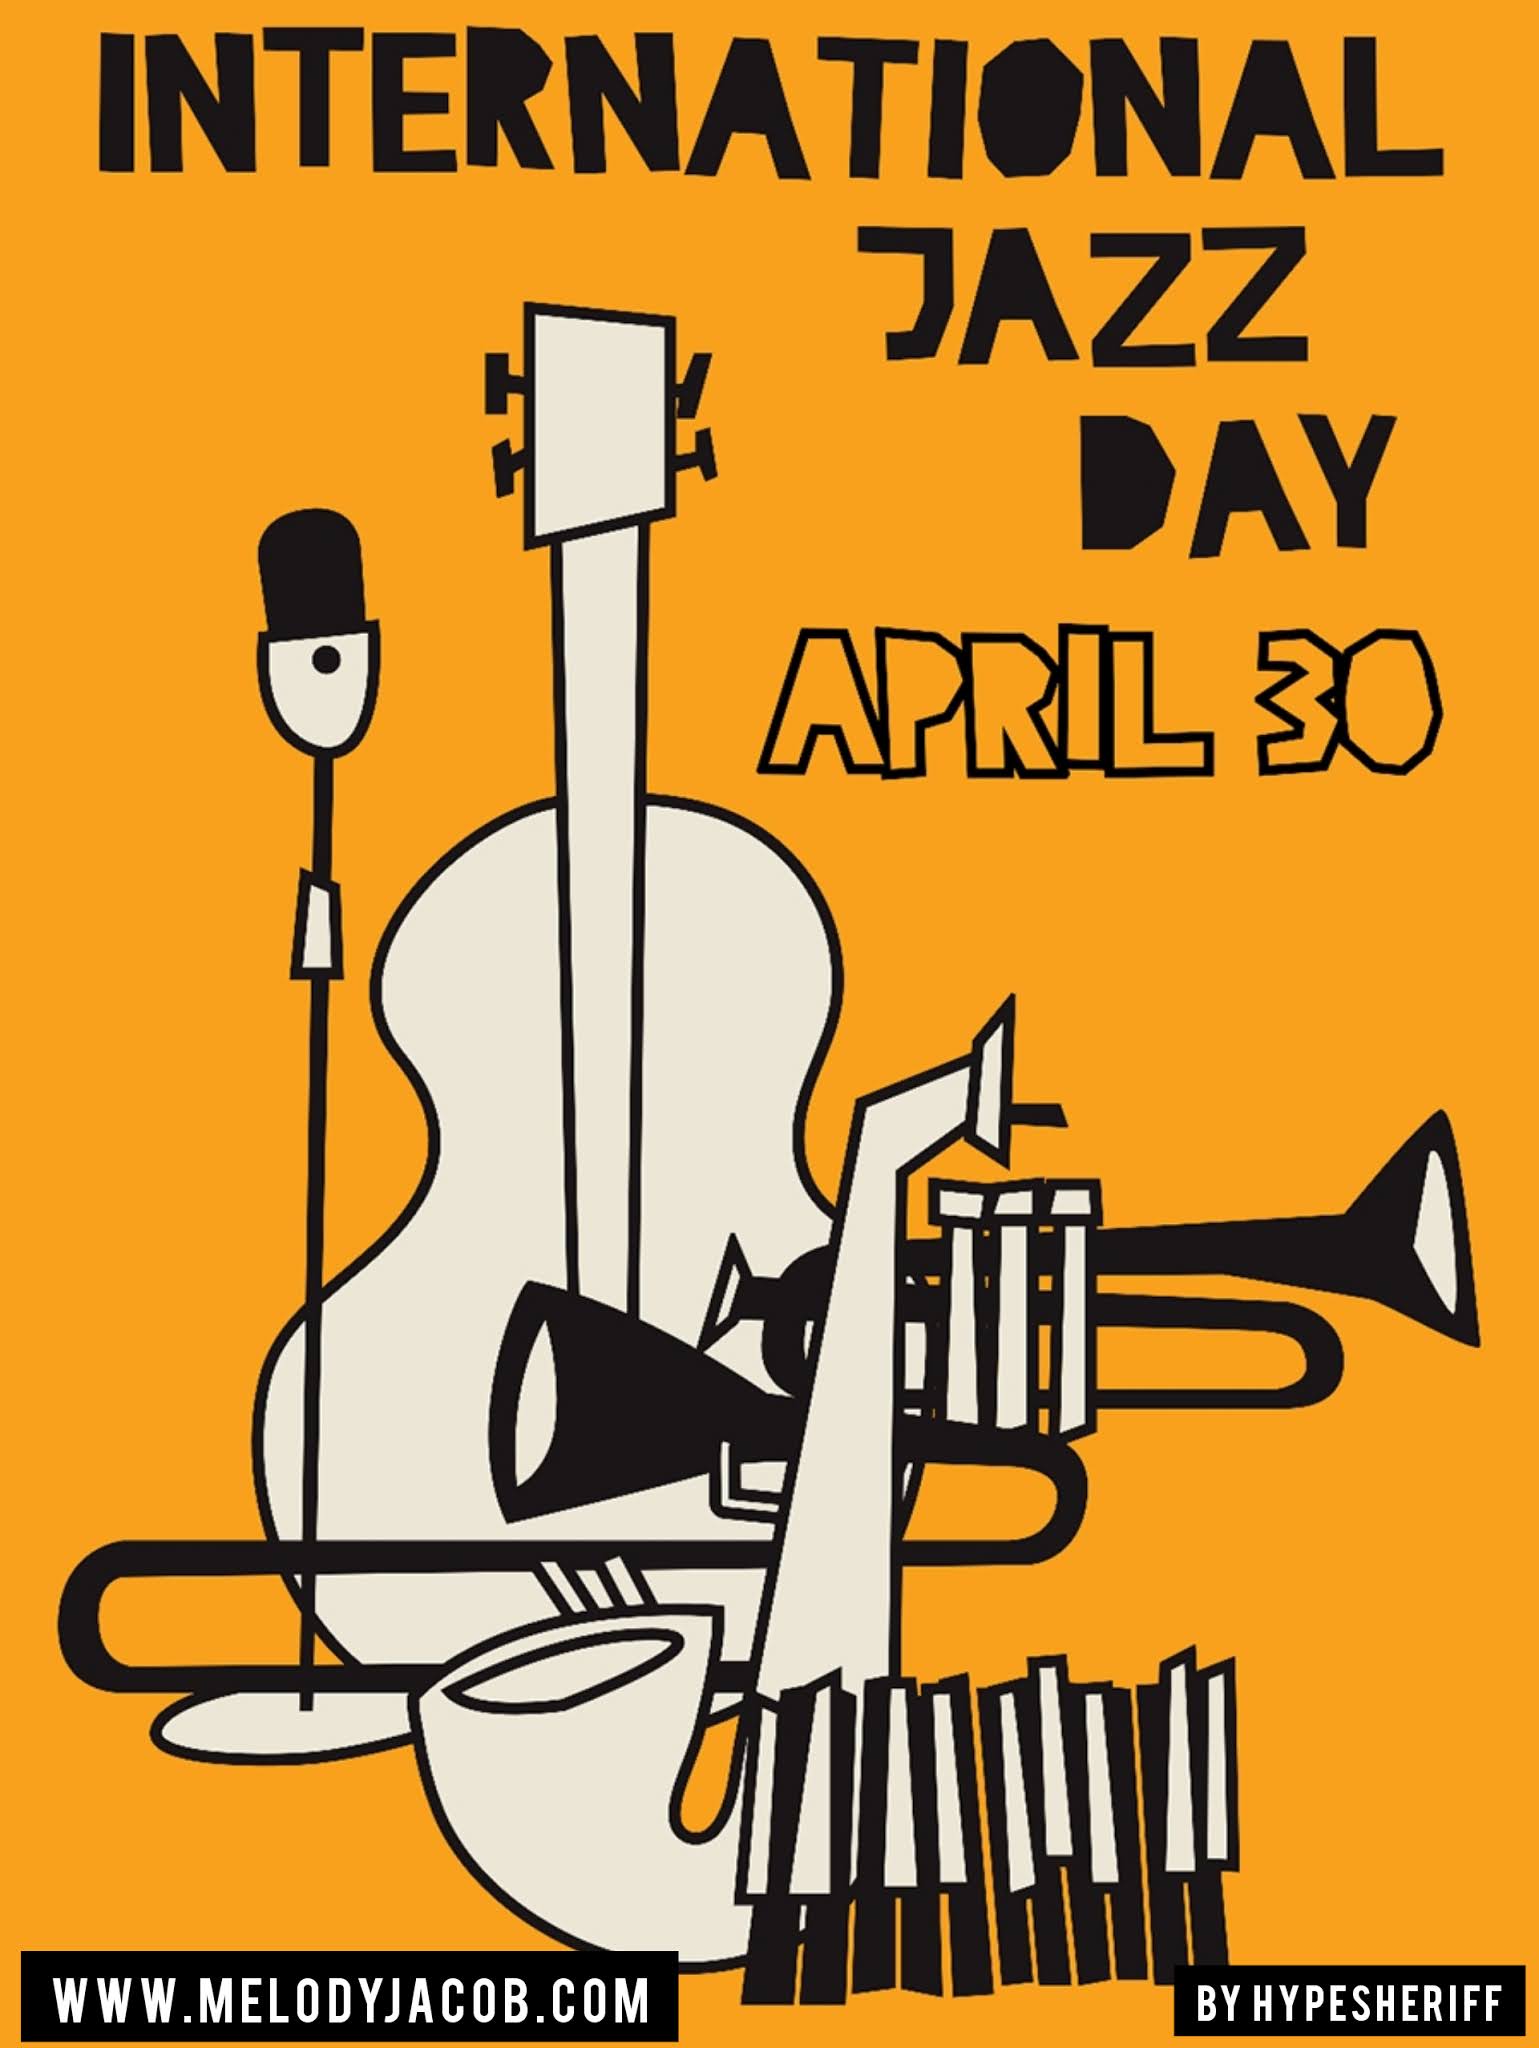 International Jazz Day April 30 in honor of Jazz music.